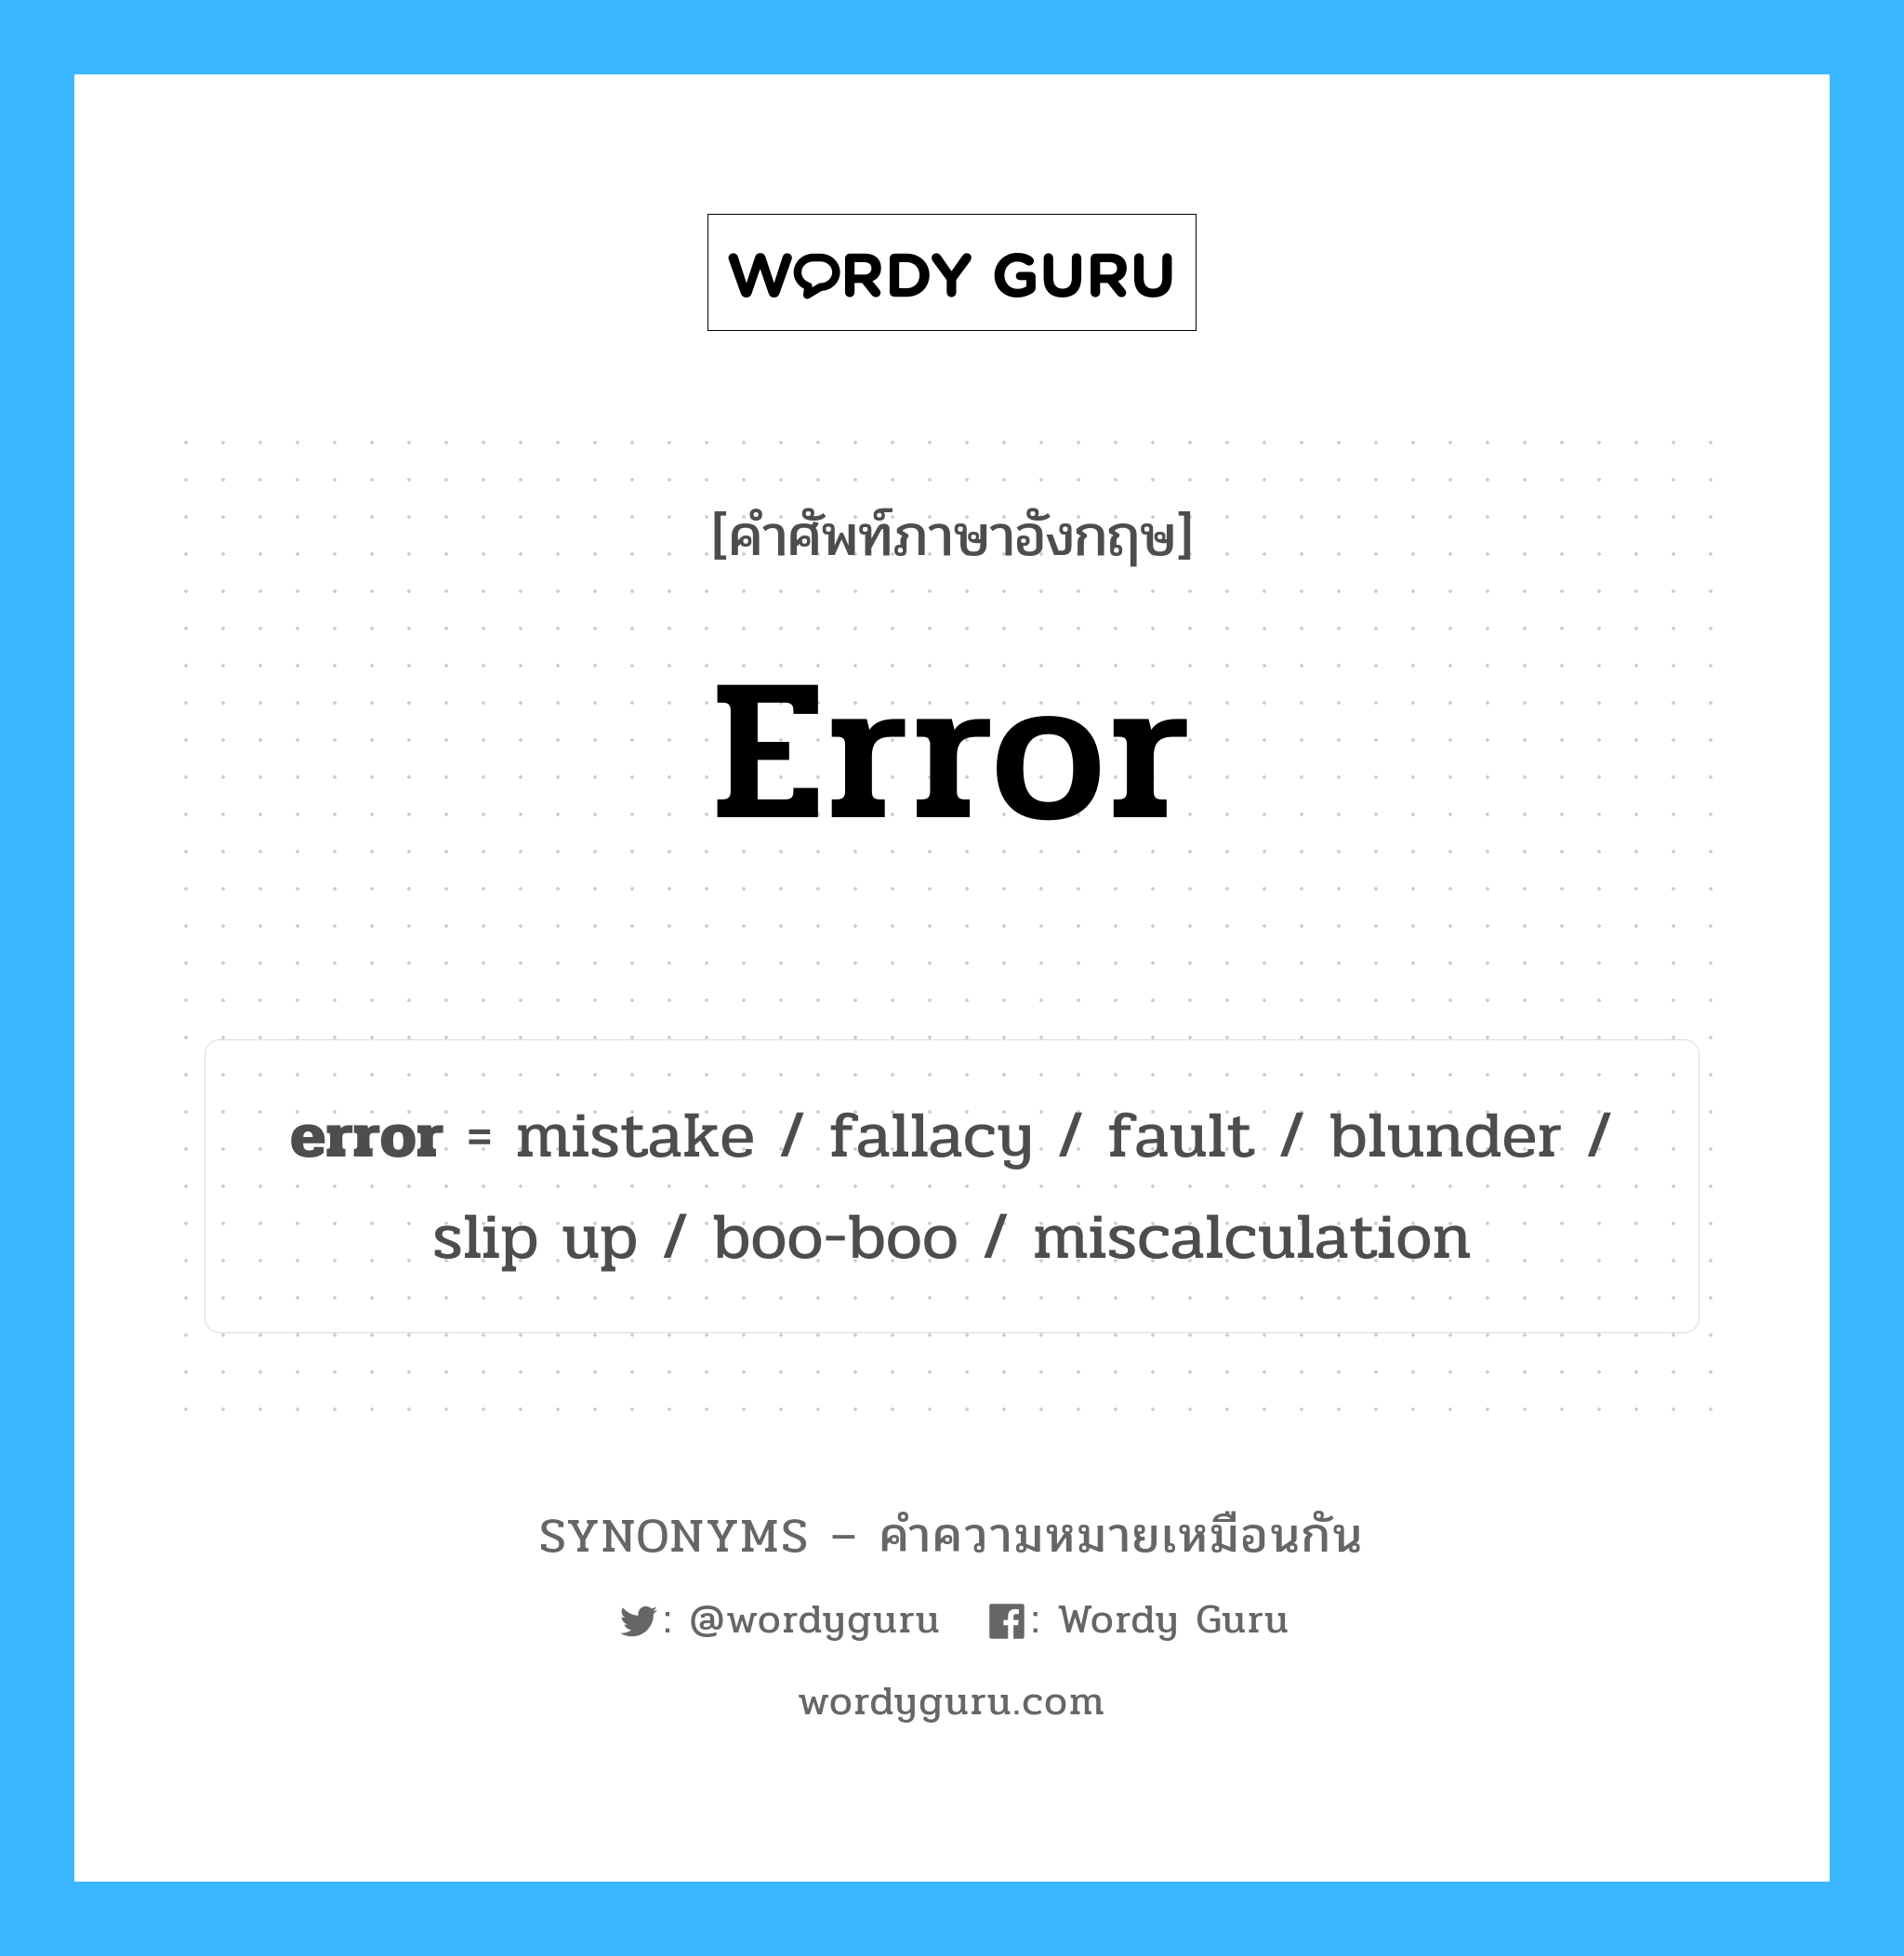 mistake เป็นหนึ่งใน error และมีคำอื่น ๆ อีกดังนี้, คำศัพท์ภาษาอังกฤษ mistake ความหมายคล้ายกันกับ error แปลว่า ความผิดพลาด หมวด error